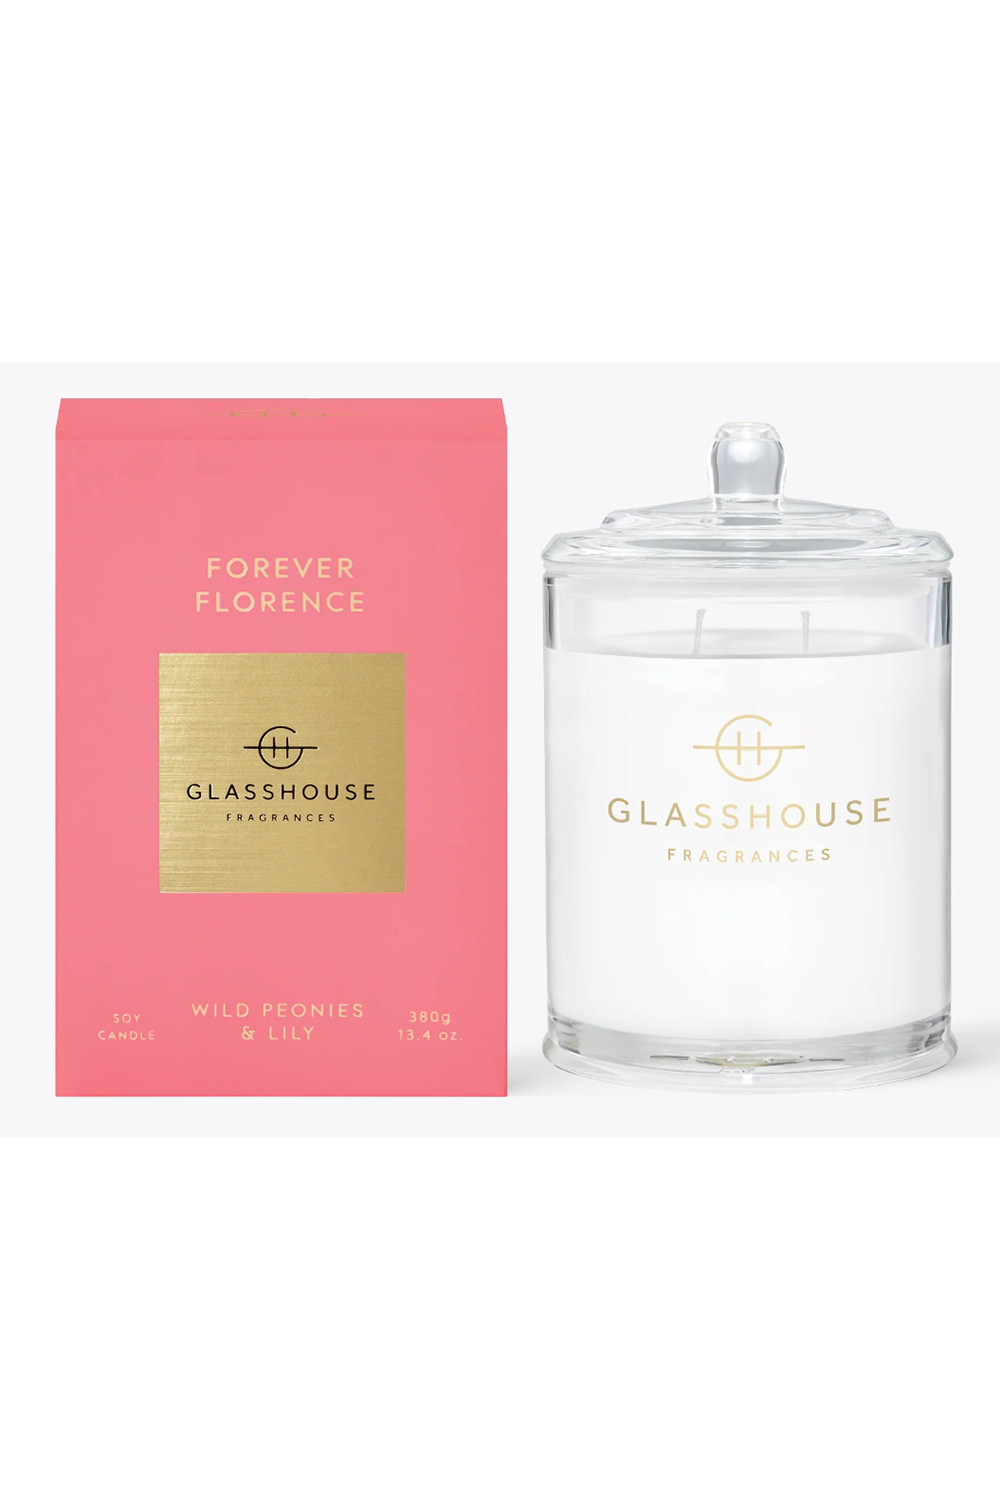 Glasshouse Fragrance Candle - Forever Florence